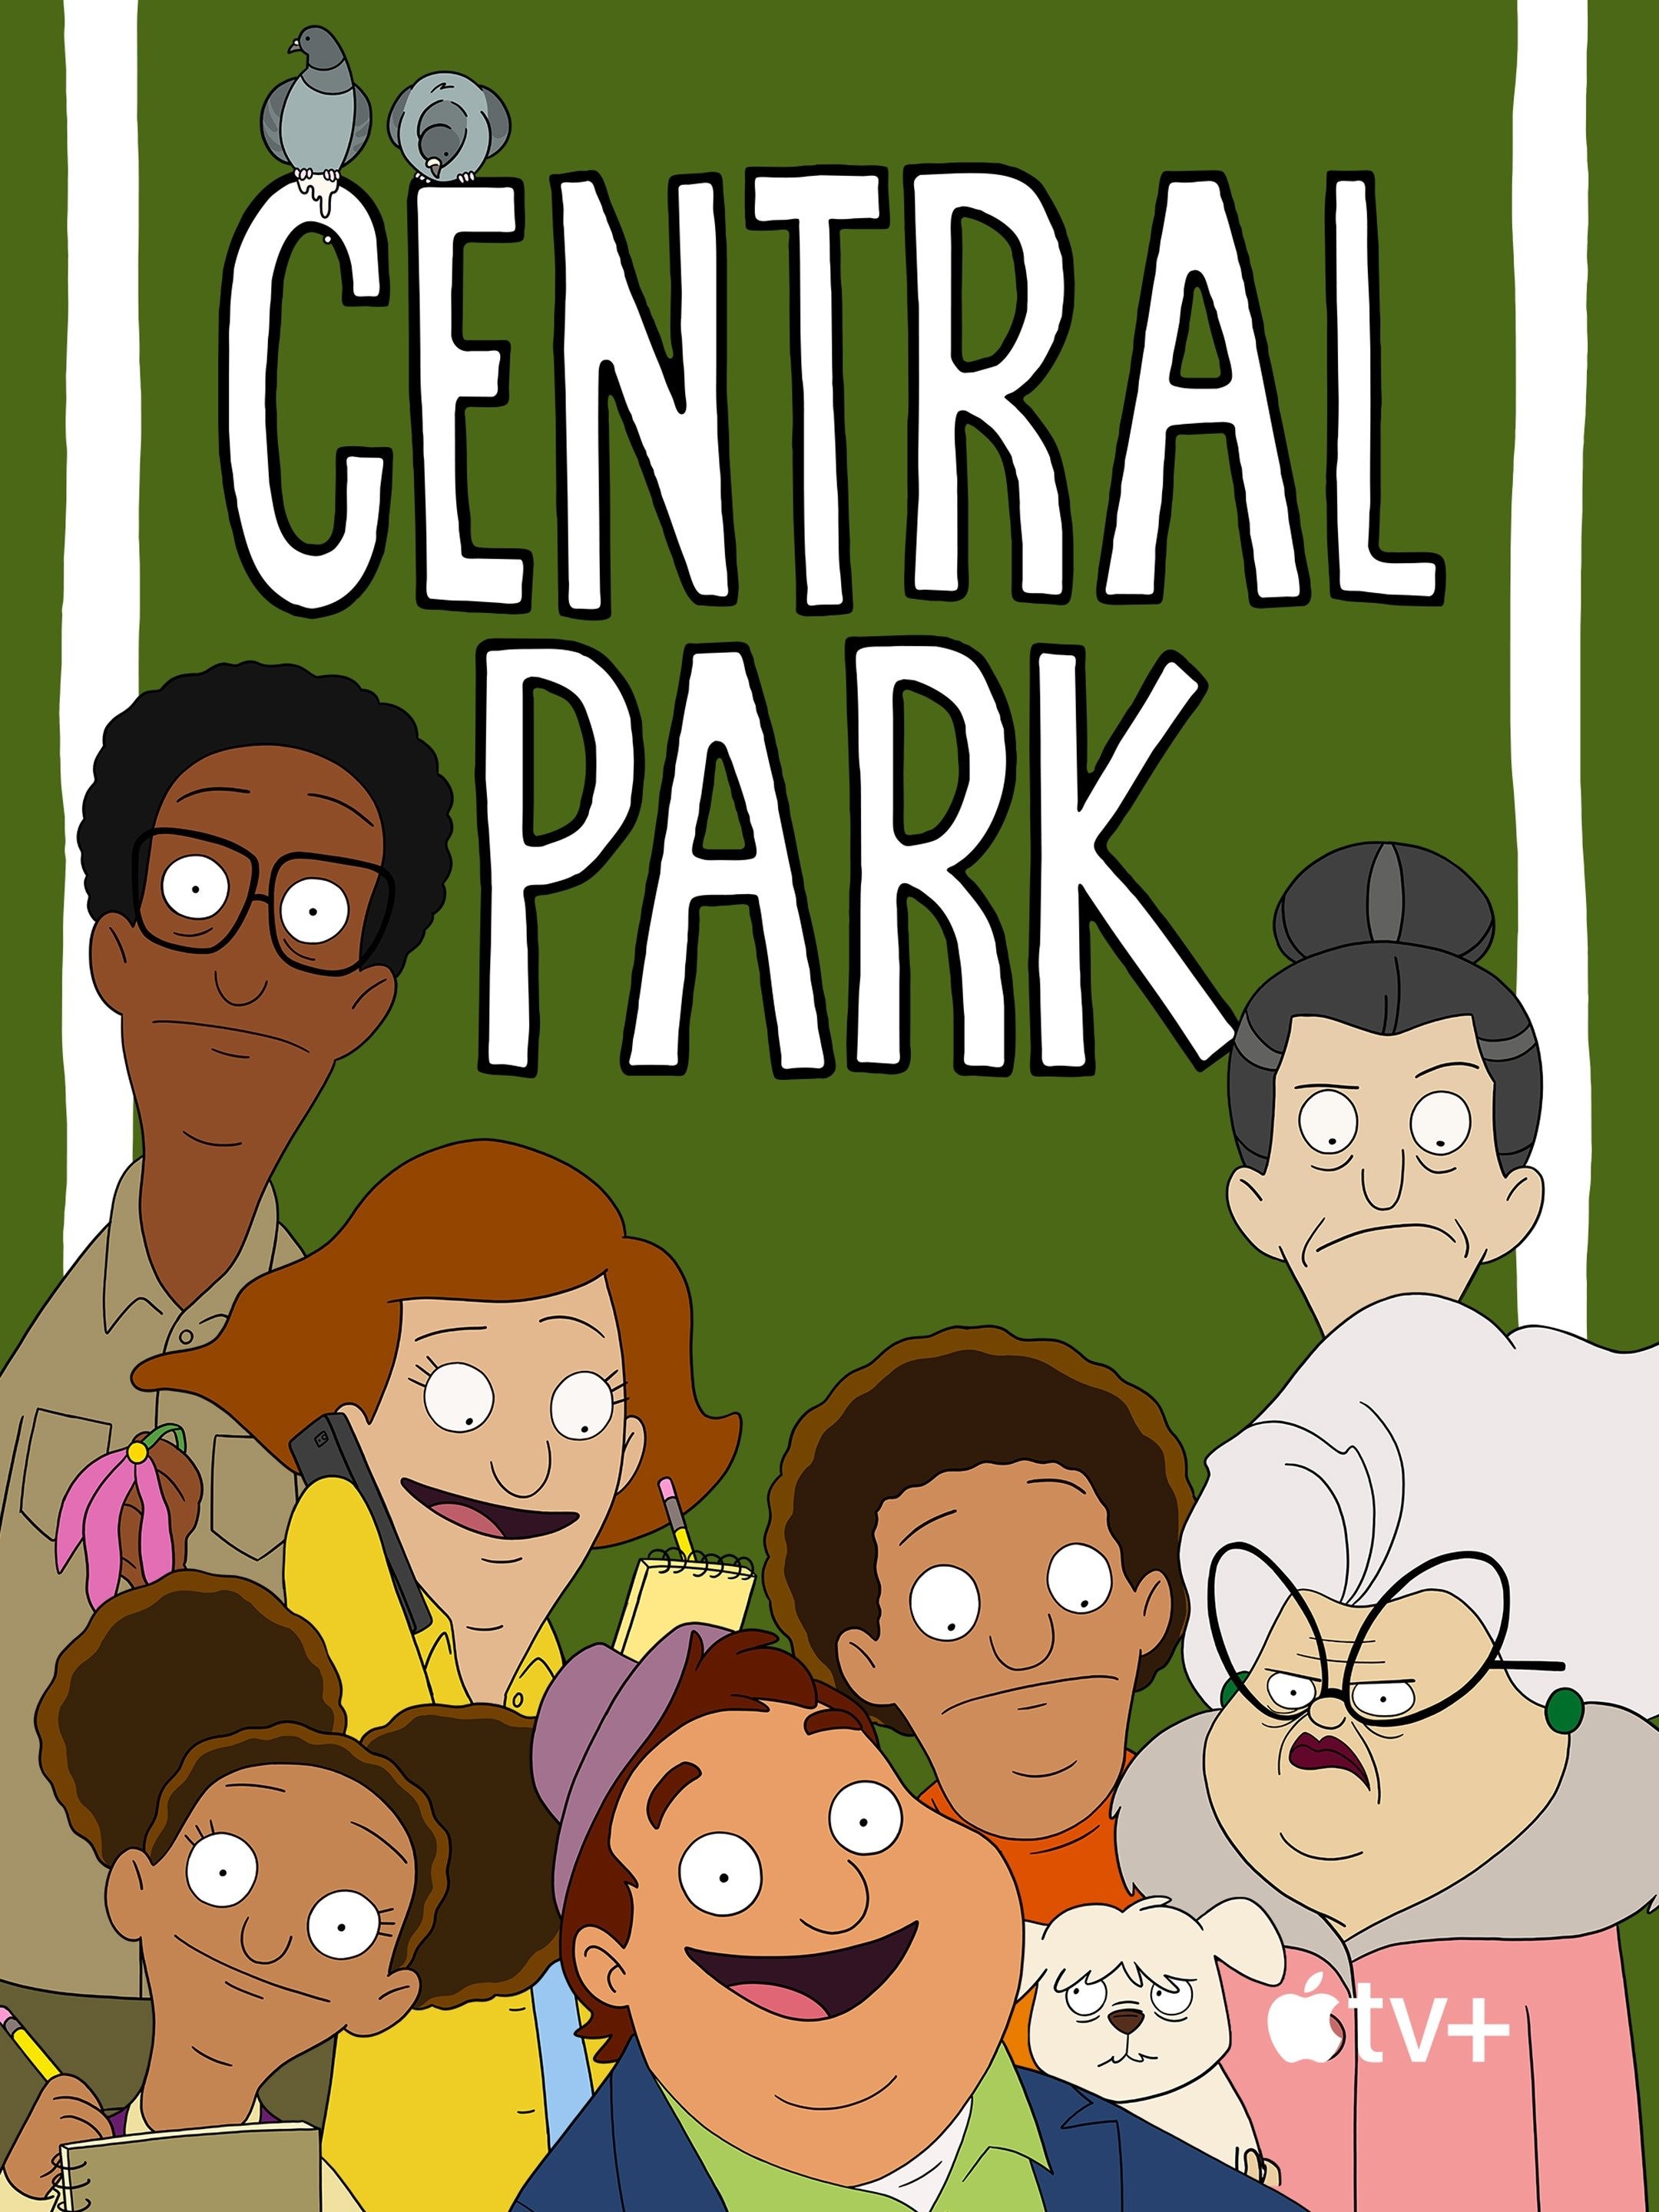 Central Park Media 2002 Catalog, PDF, Anime